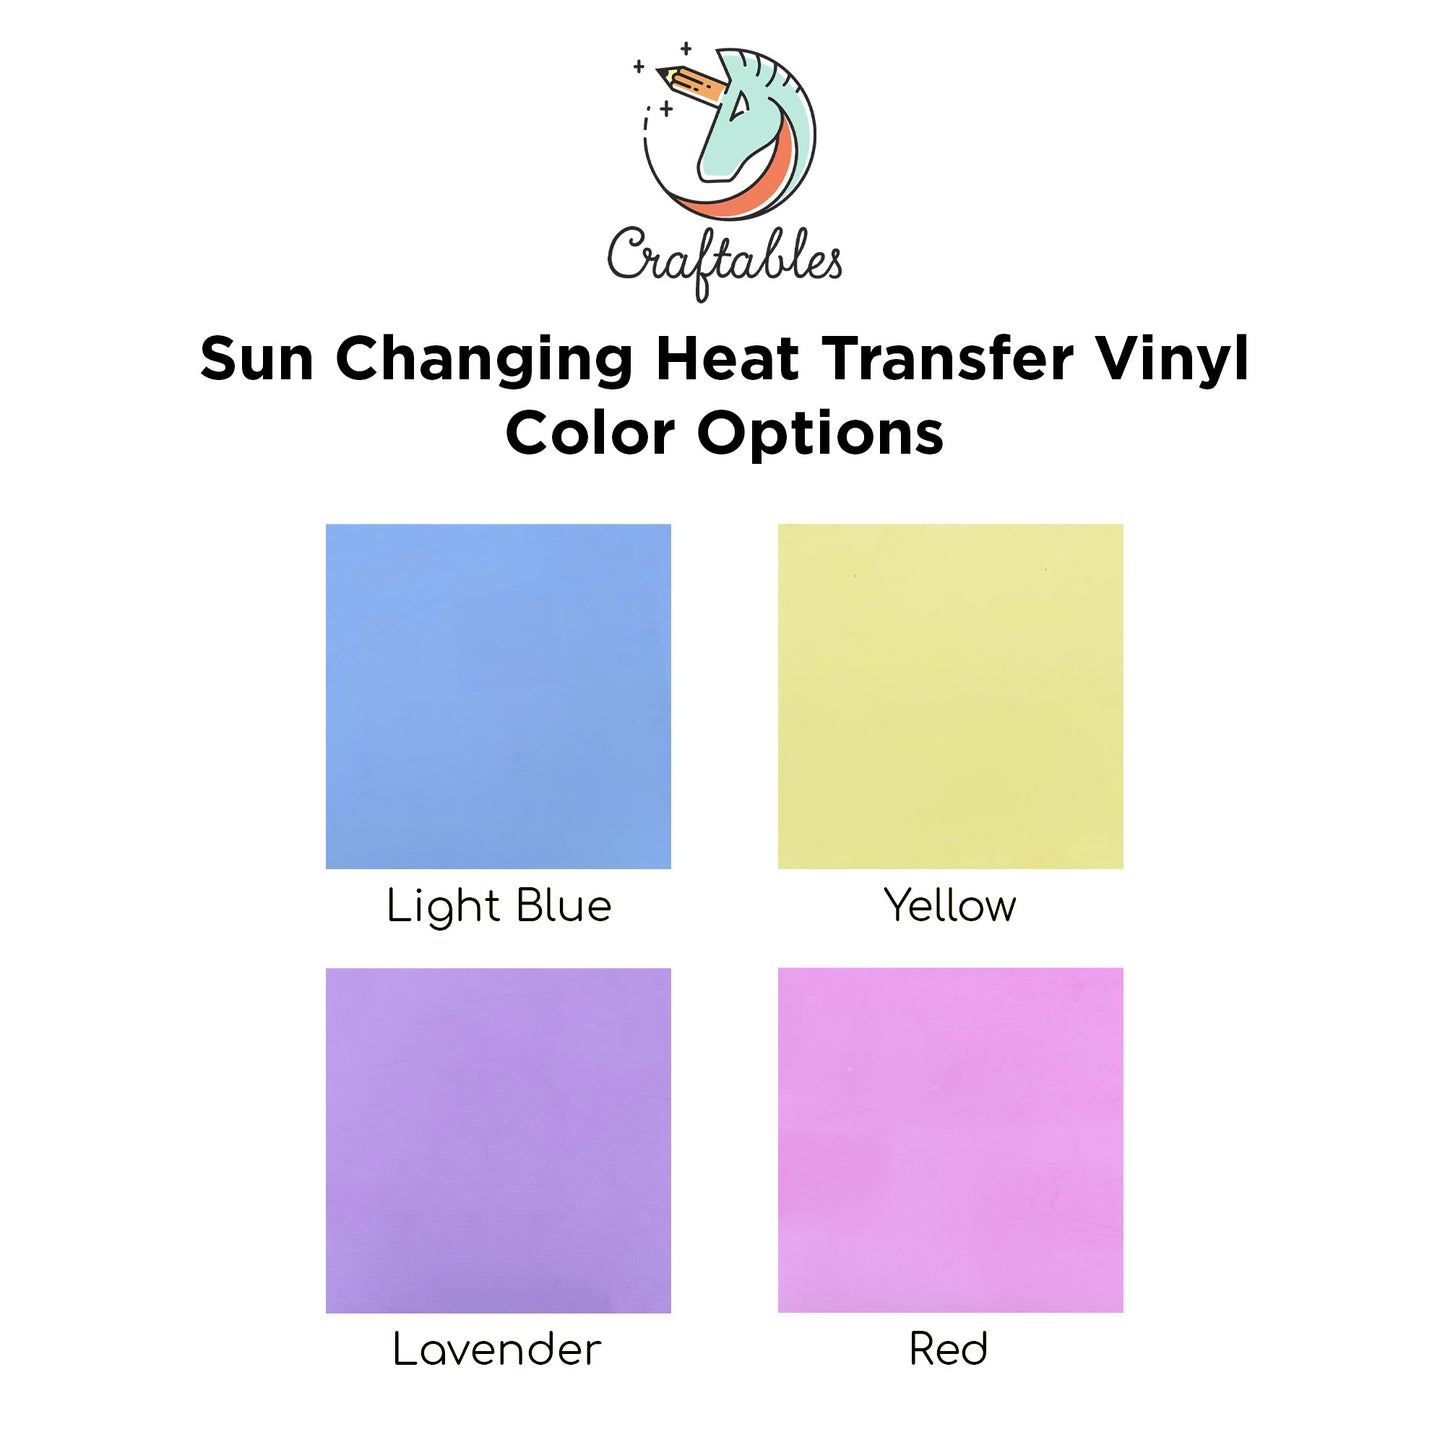 Light Blue Light Changing Heat Transfer Vinyl Sheets By Craftables